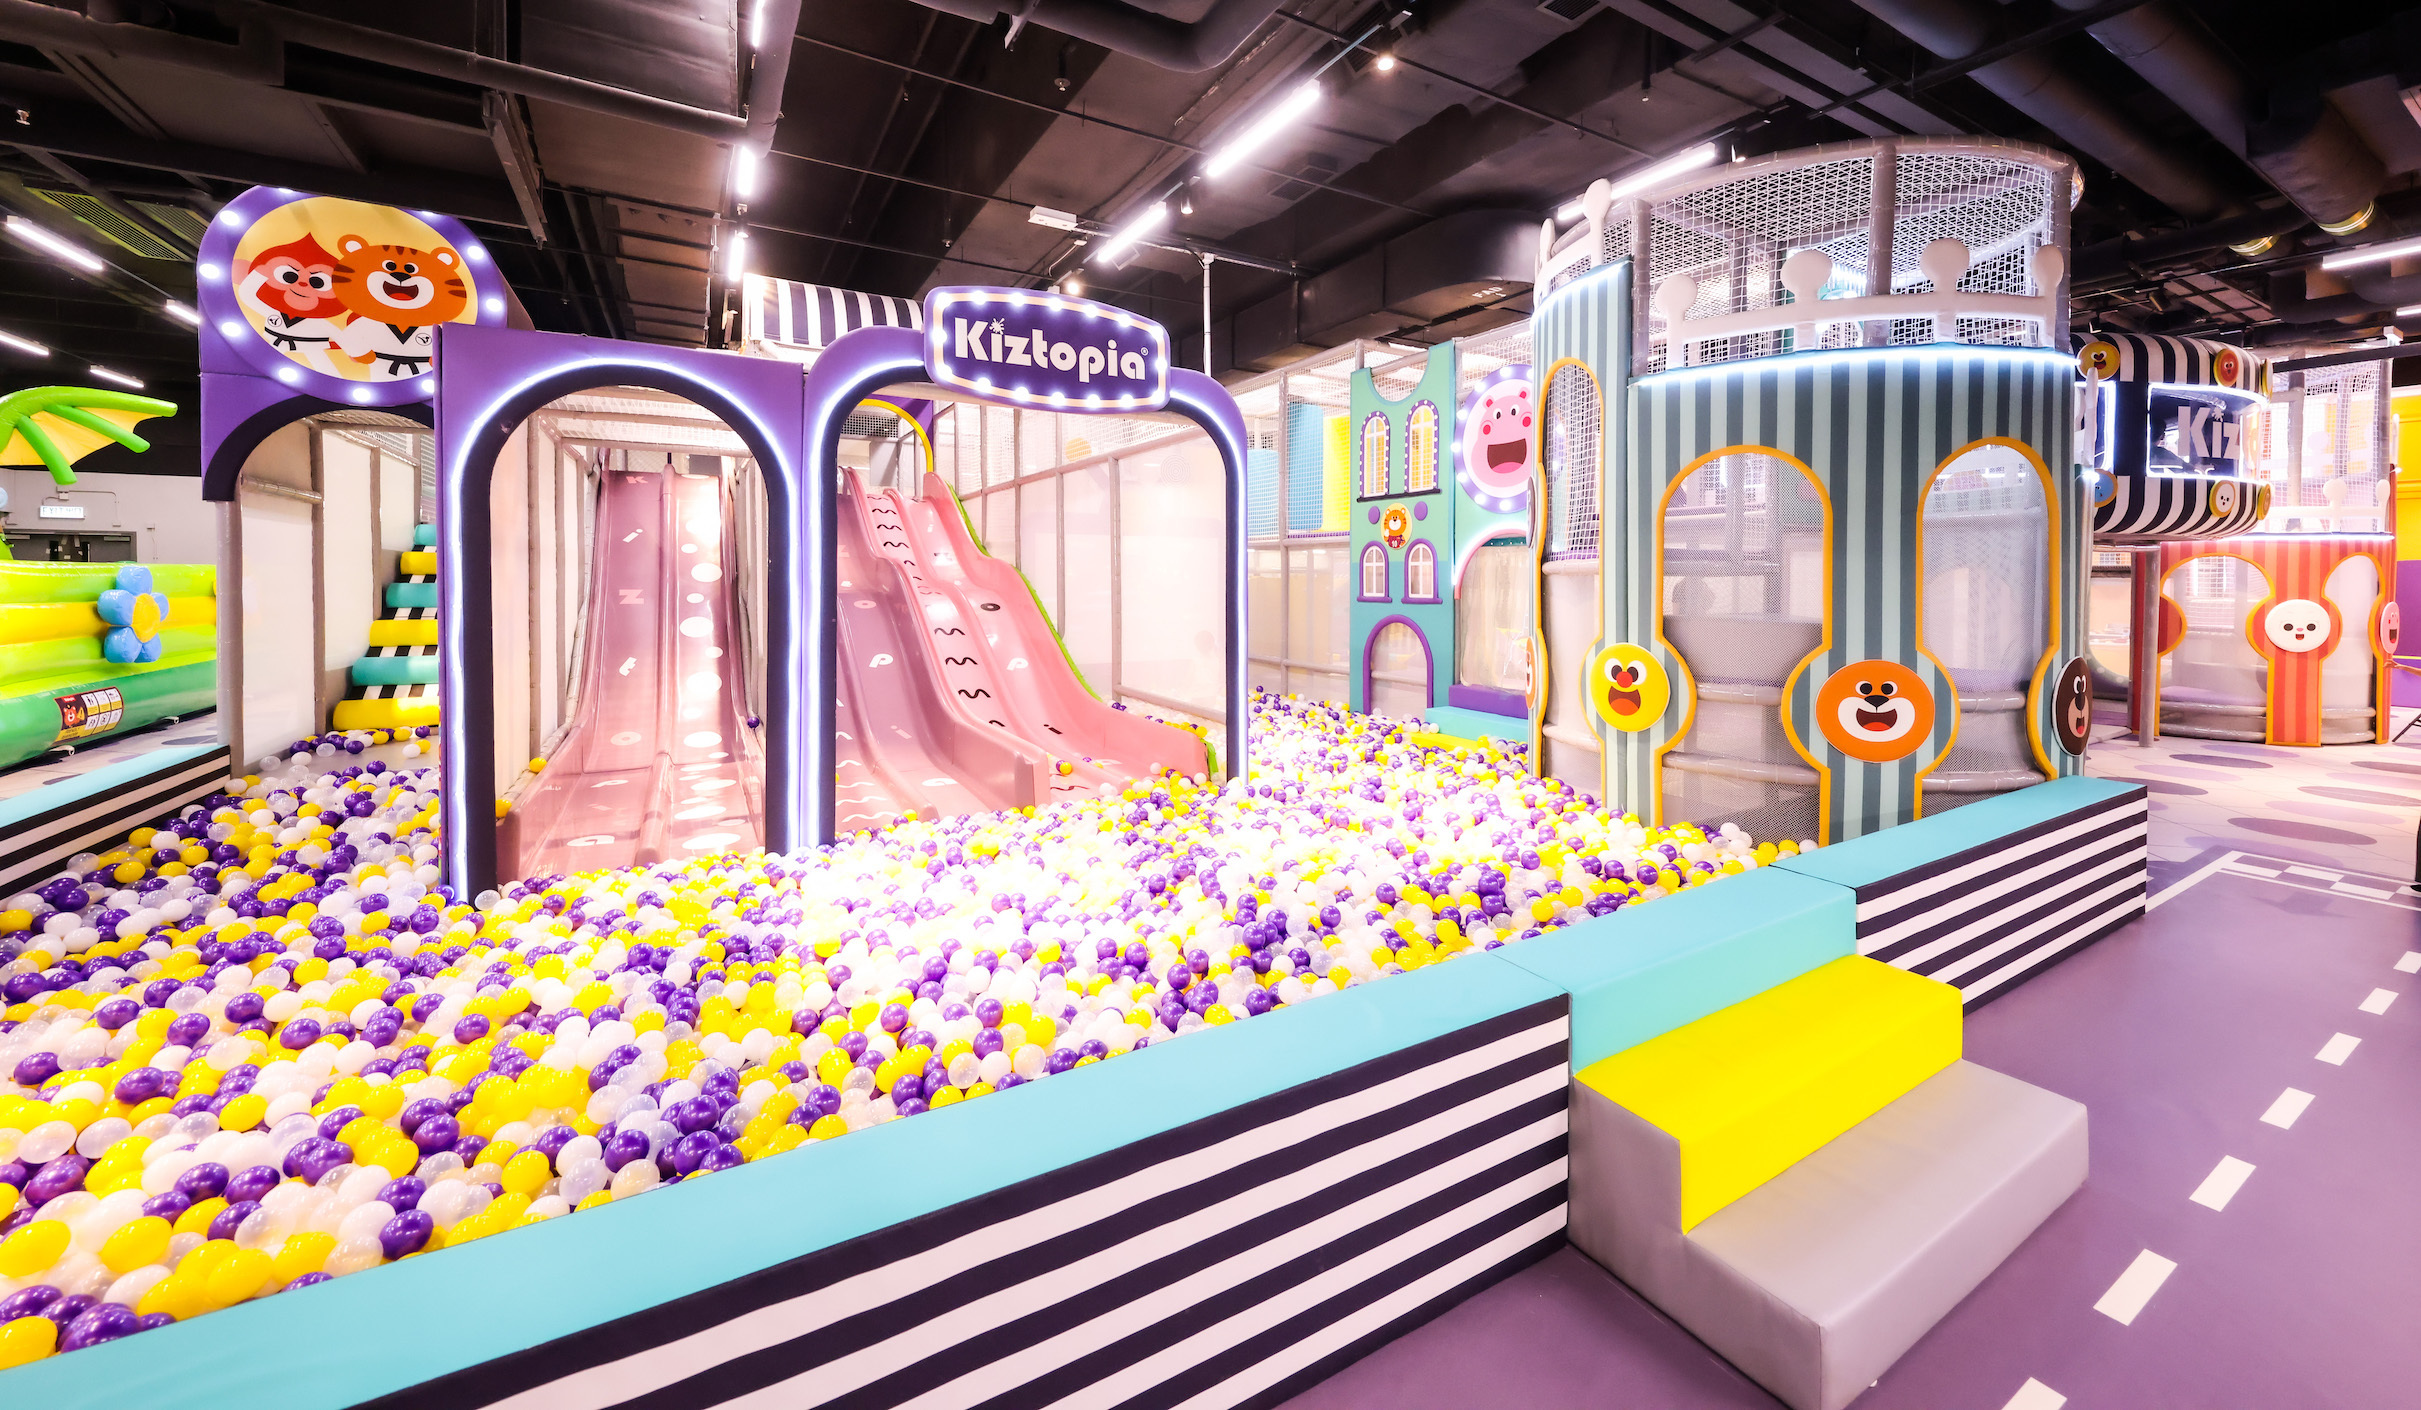 Singapore's mega indoor playground Kiztopia opens in Hong Kong